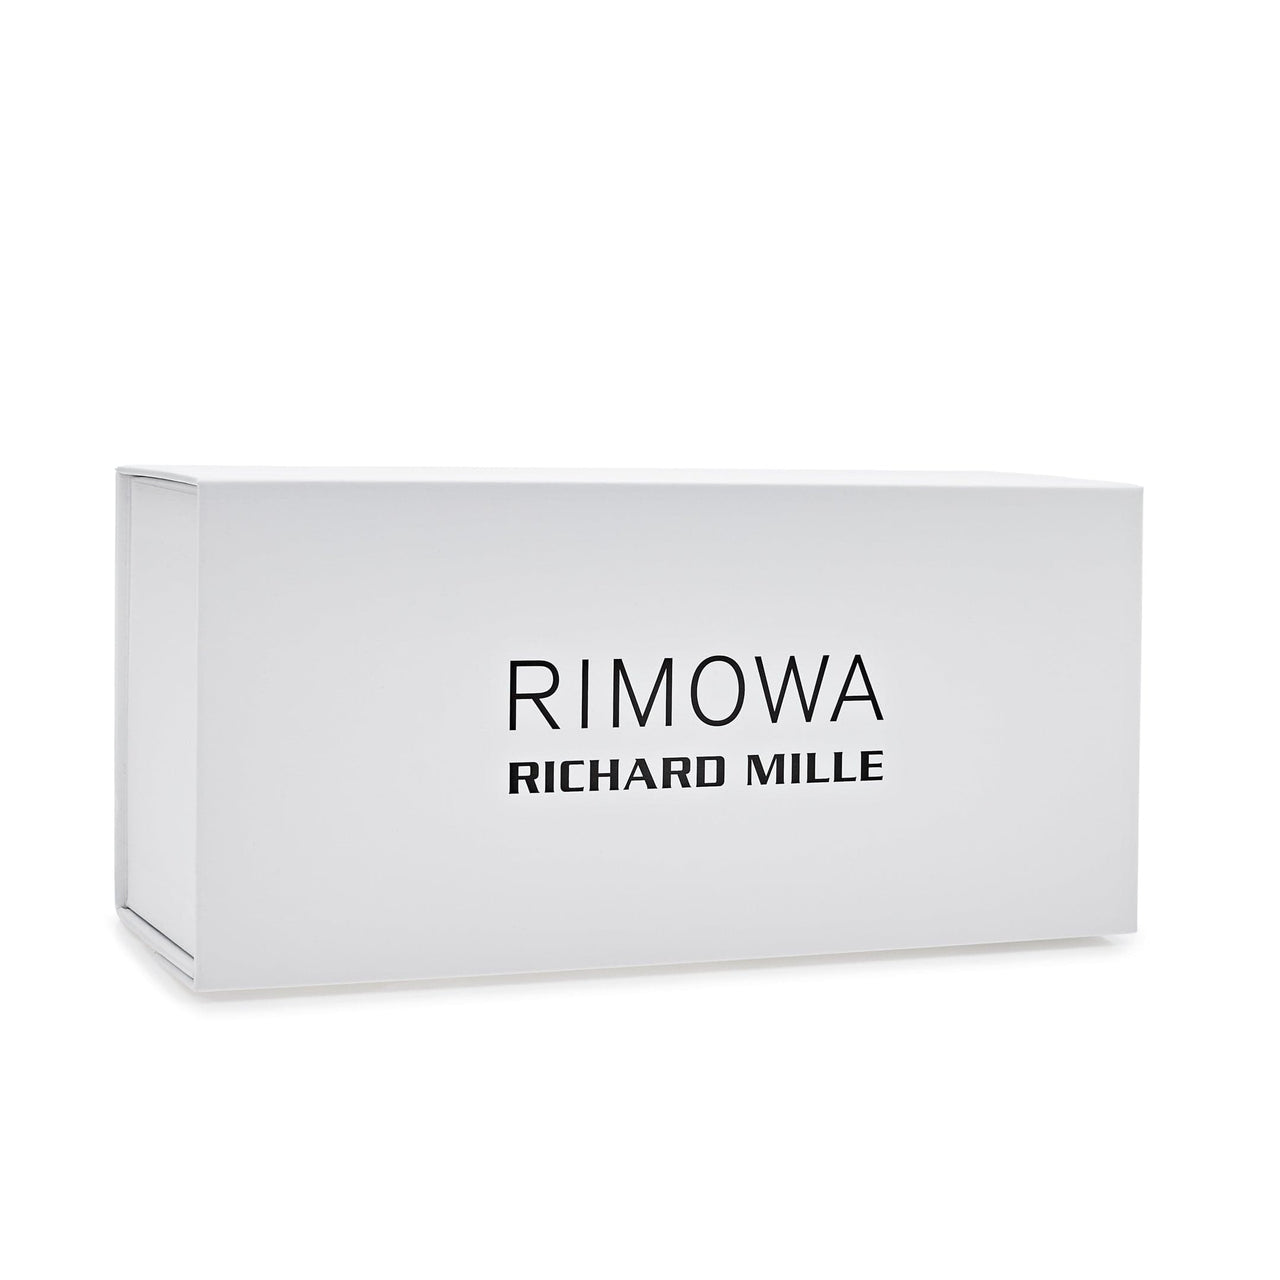 Richard Mille Rimowa Watch Box Limited Edition Wrist Aficionado